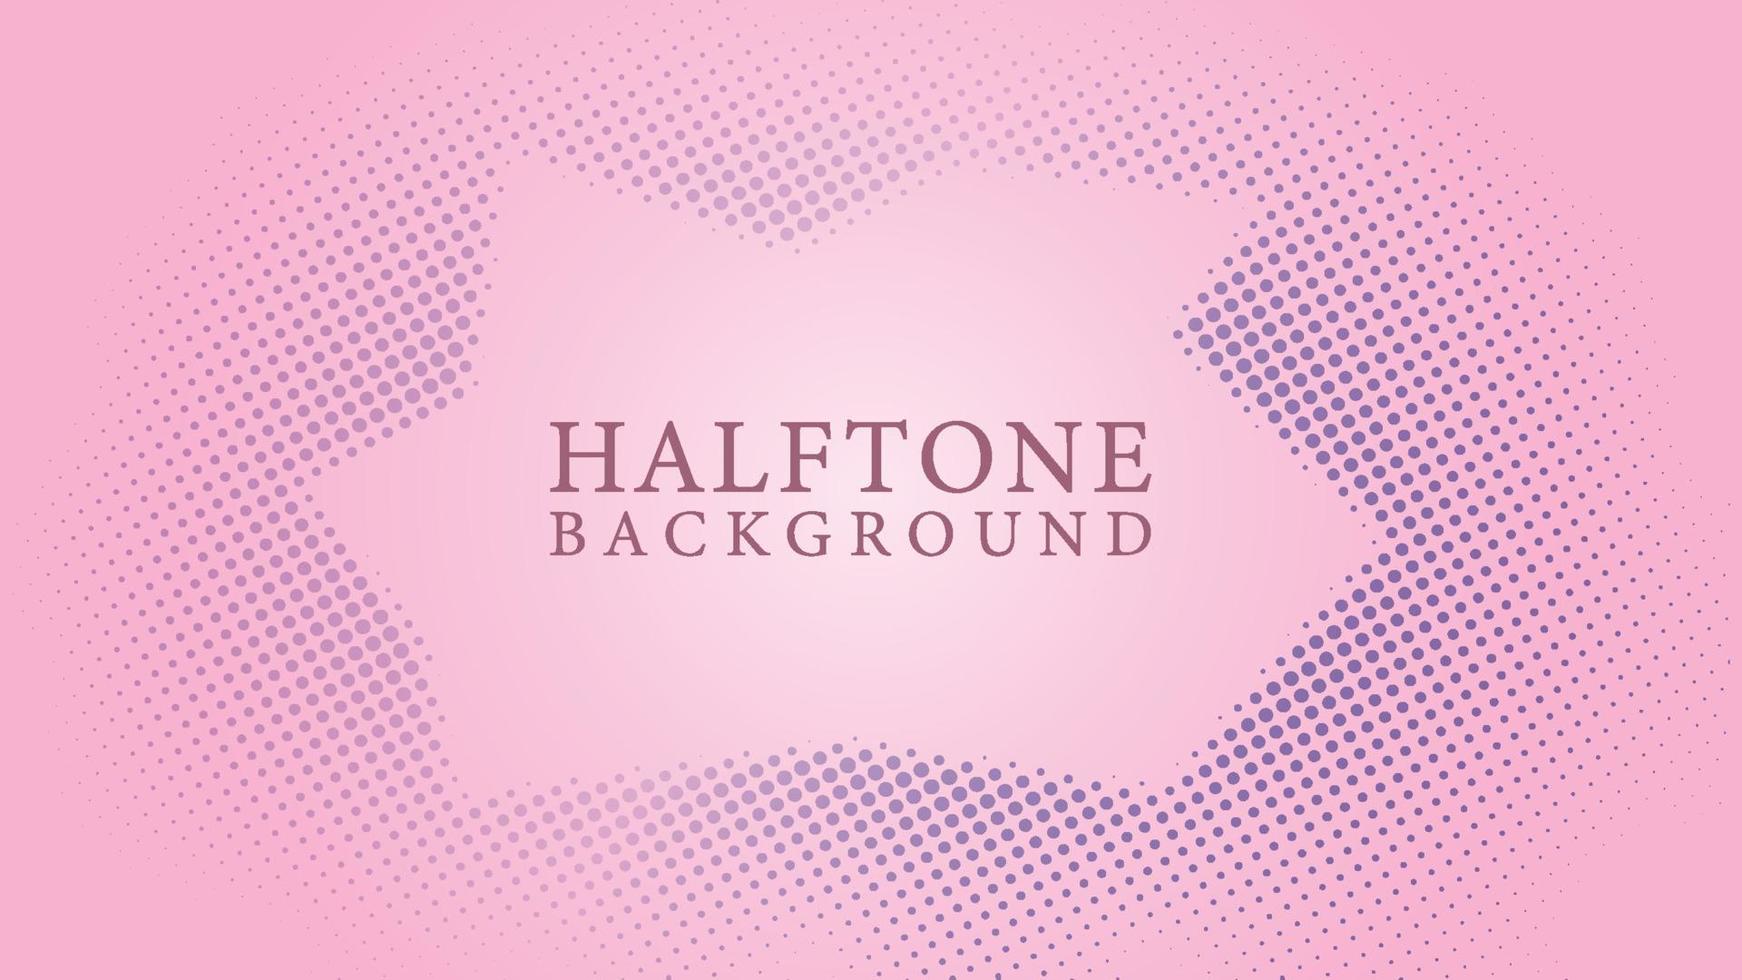 Halftone Frame Background Design Template, Abstract Dots Pattern Illustration, Retro Texture Element, Violet Pink Gradation, Romantic Colours vector